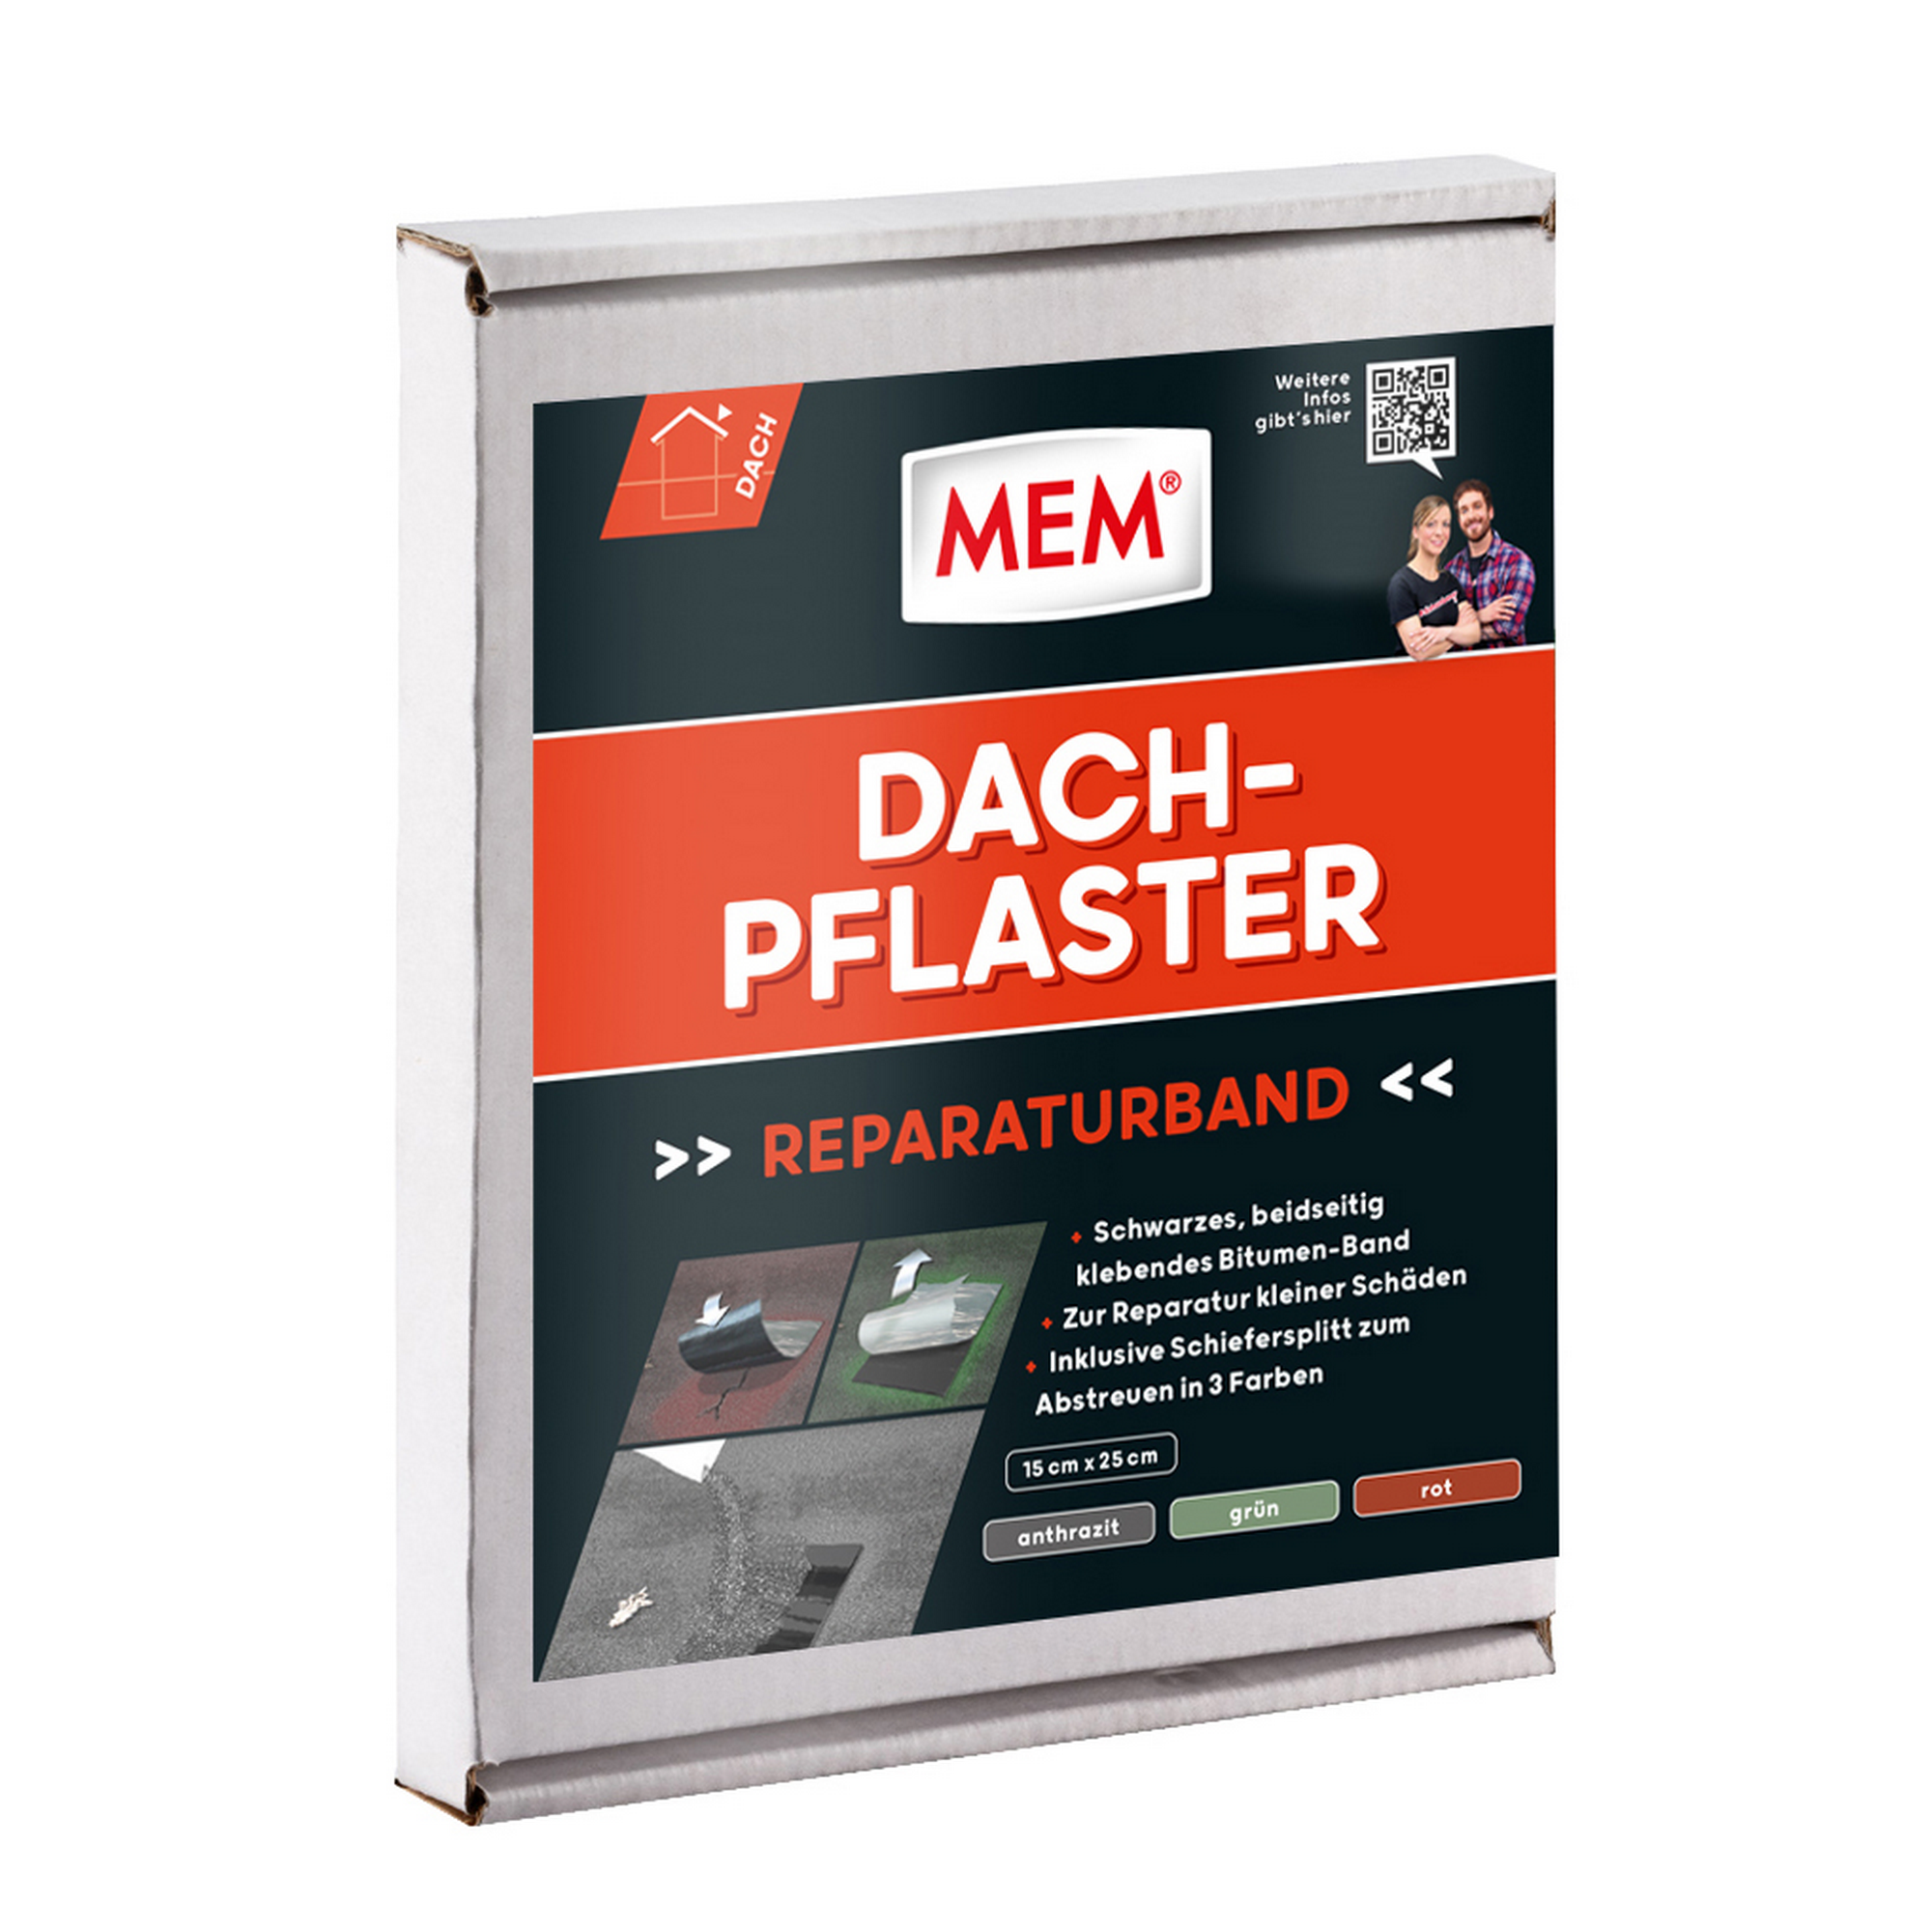 Dach-Pflaster Reparaturband 15 cm x 25 cm + product picture